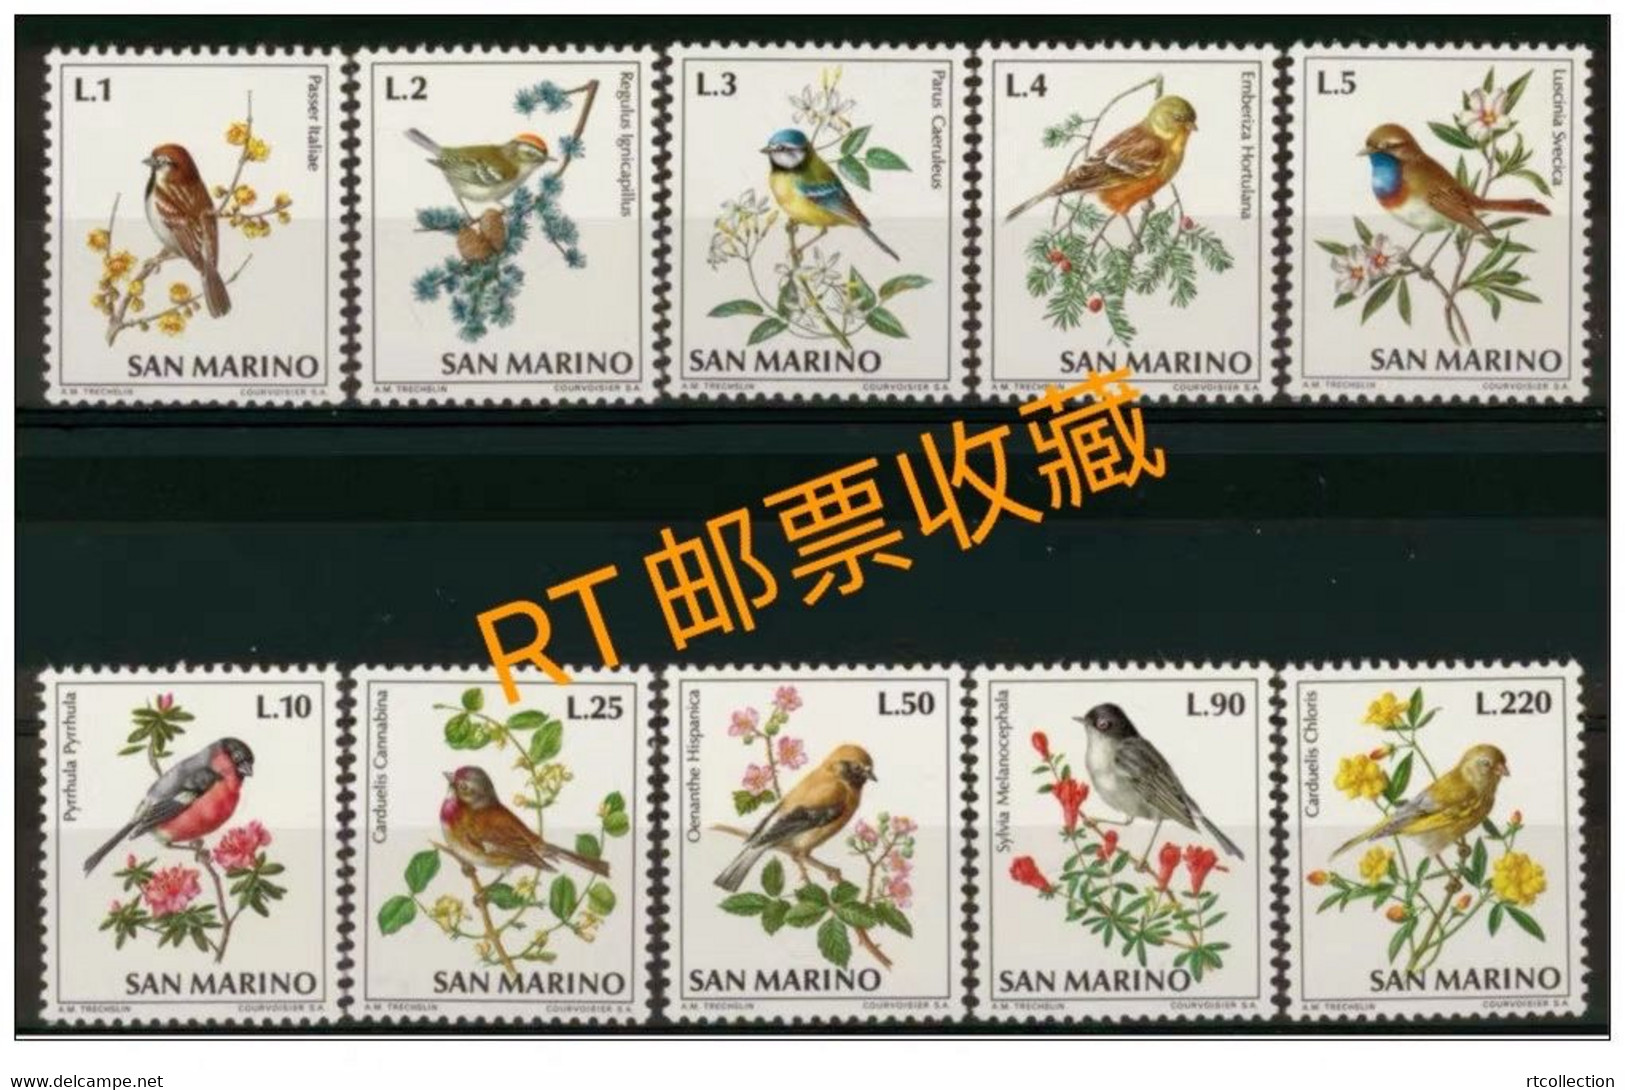 San Marino 1972 Song Birds Nature Flowers Plants Bird Flora Plant Fauna Songbirds Sparrows Stamps MNH Scott 777-786 - Mussen